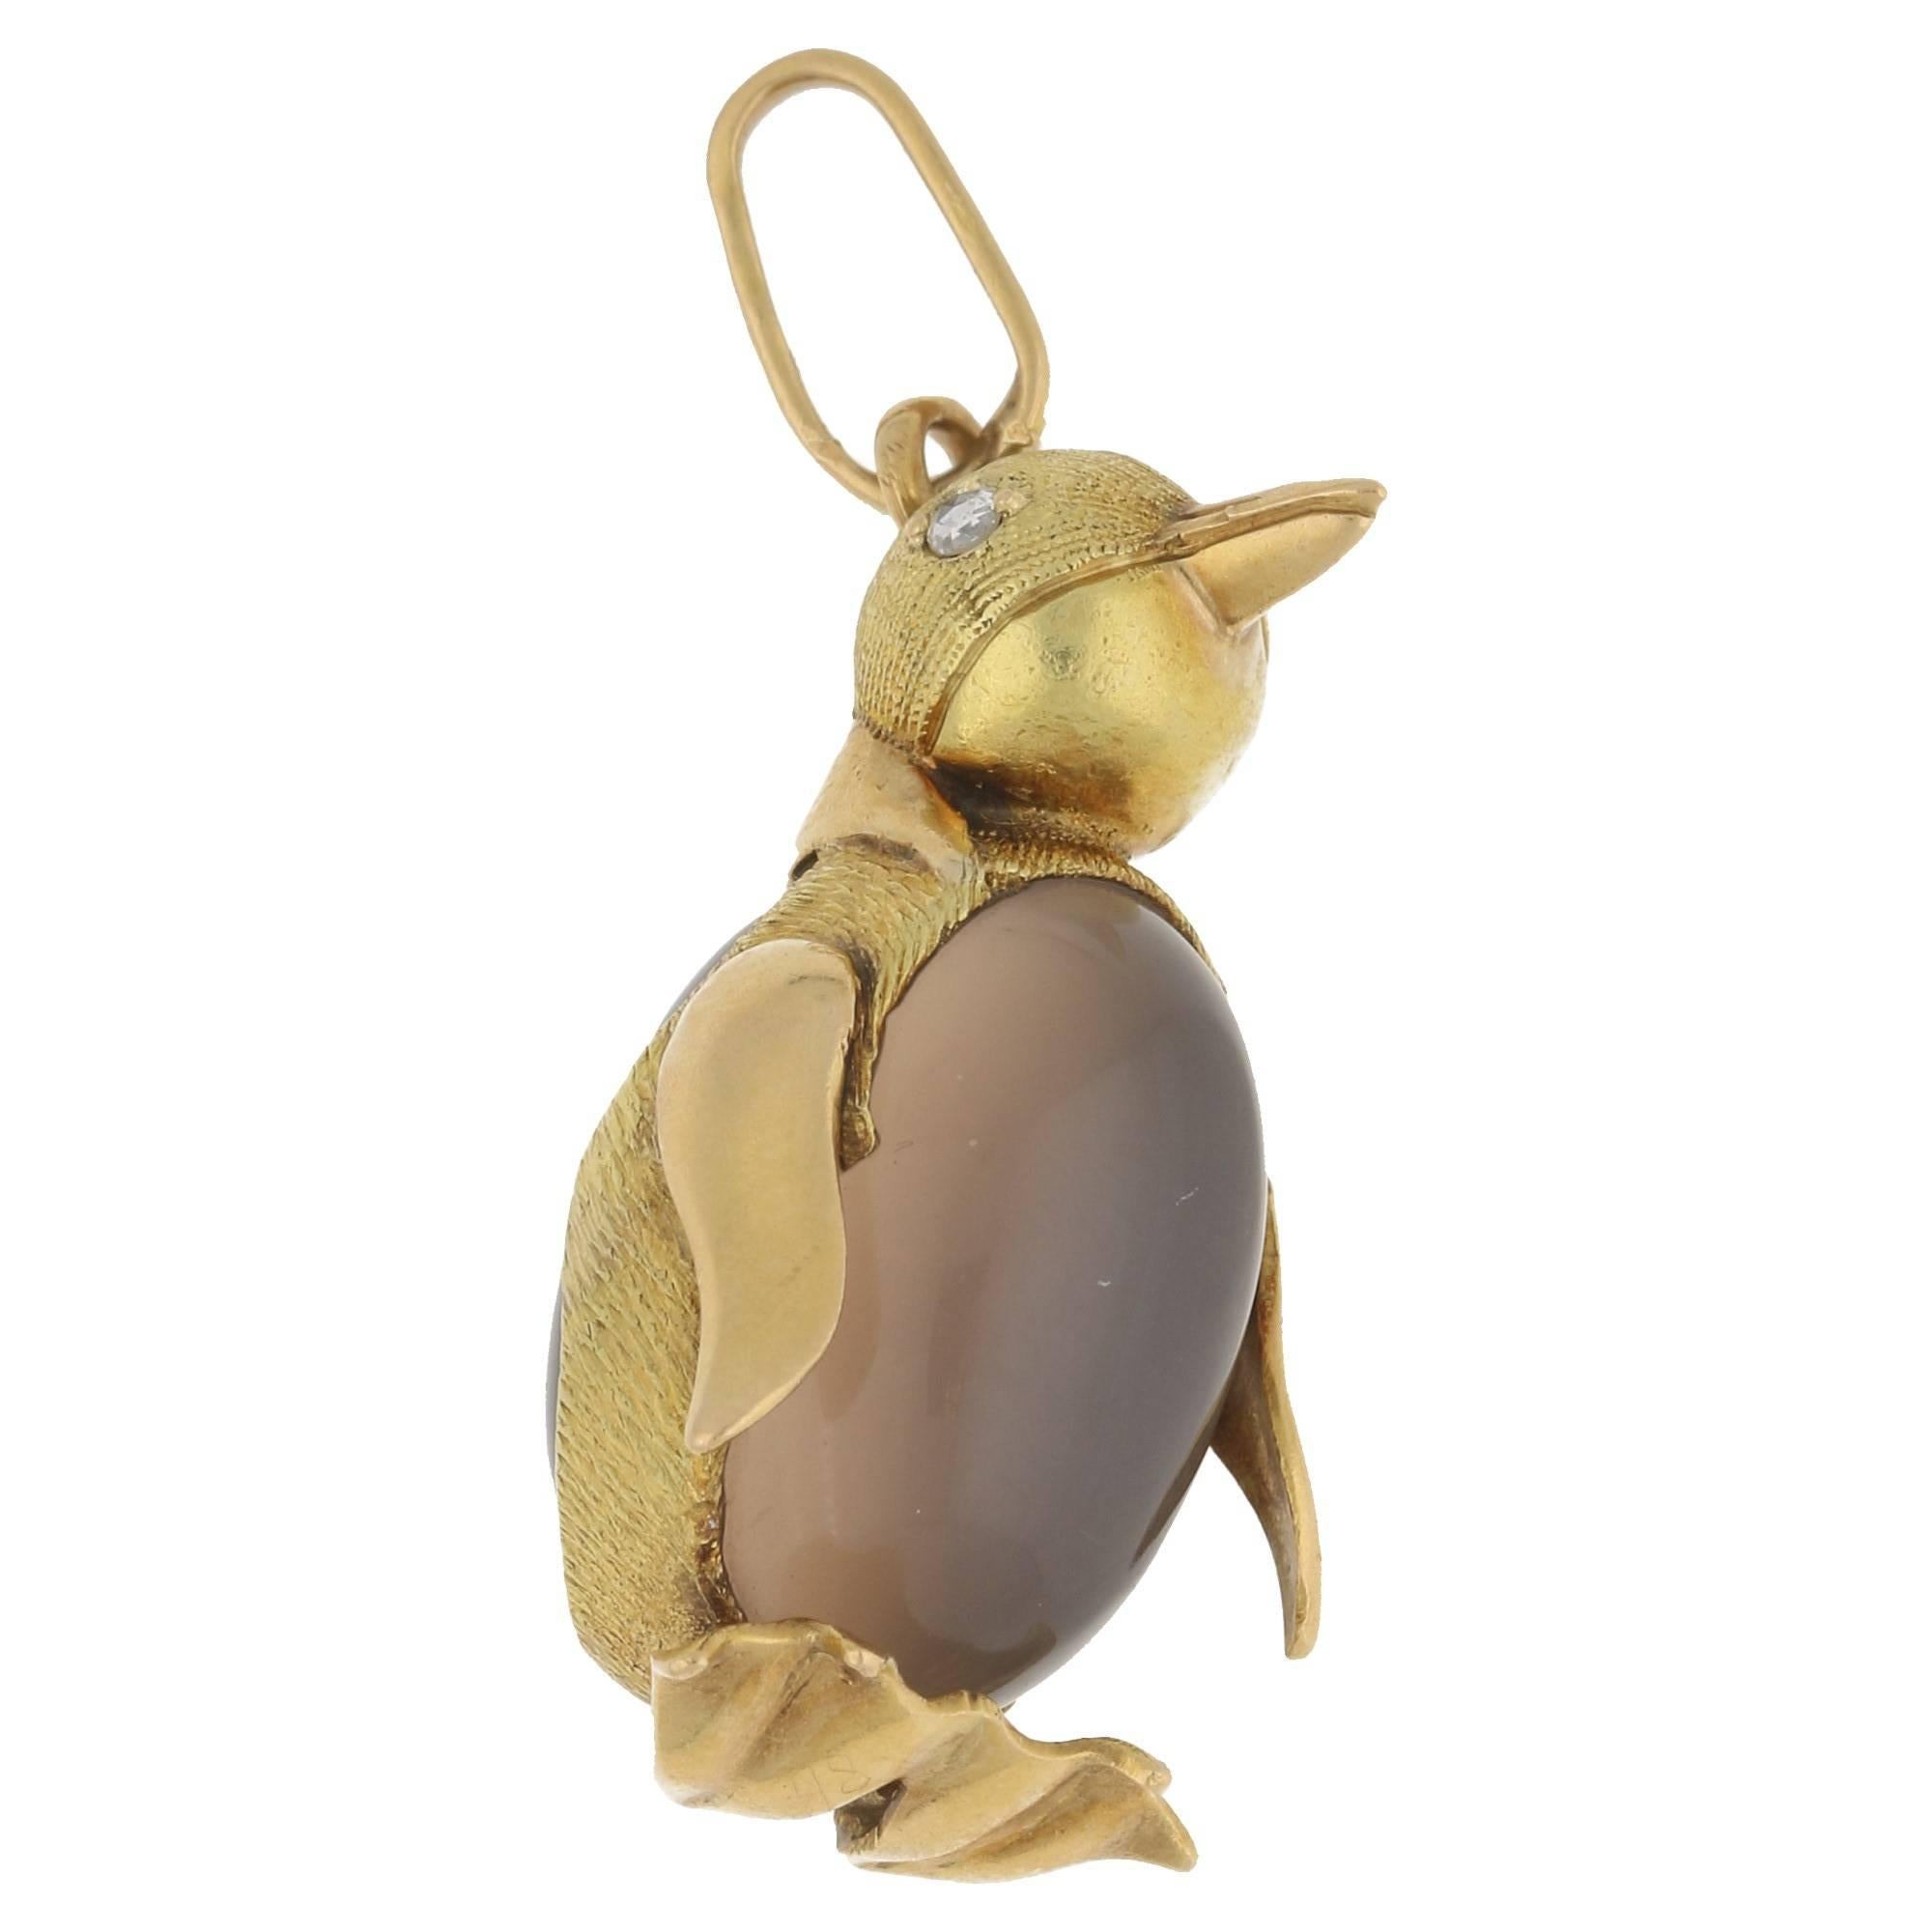 18 Karat Gold Penguin Charm Pendant